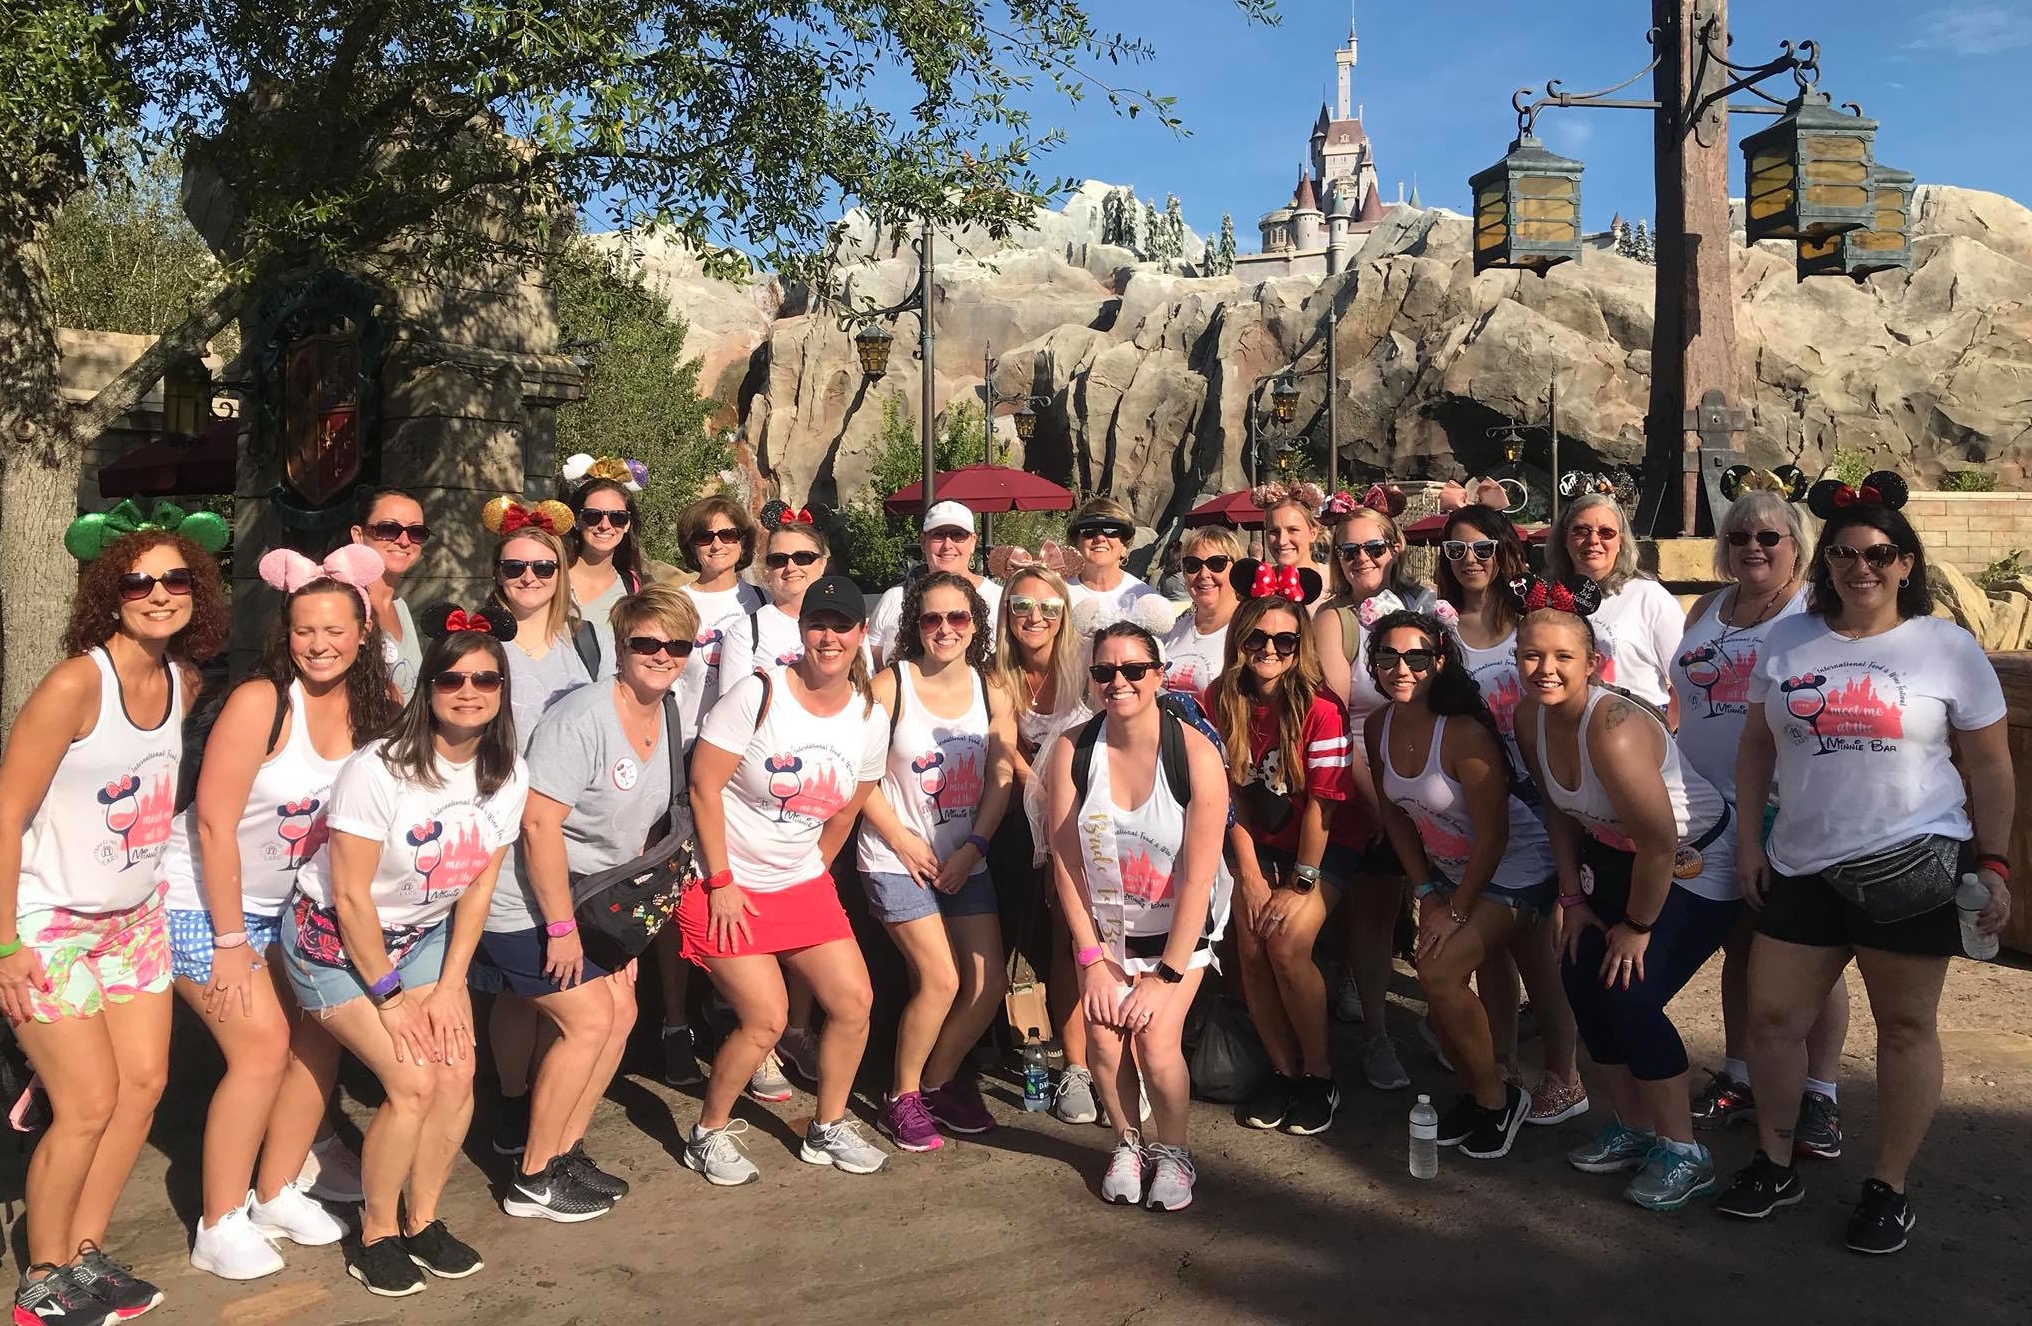 Group Photo of women at Disney